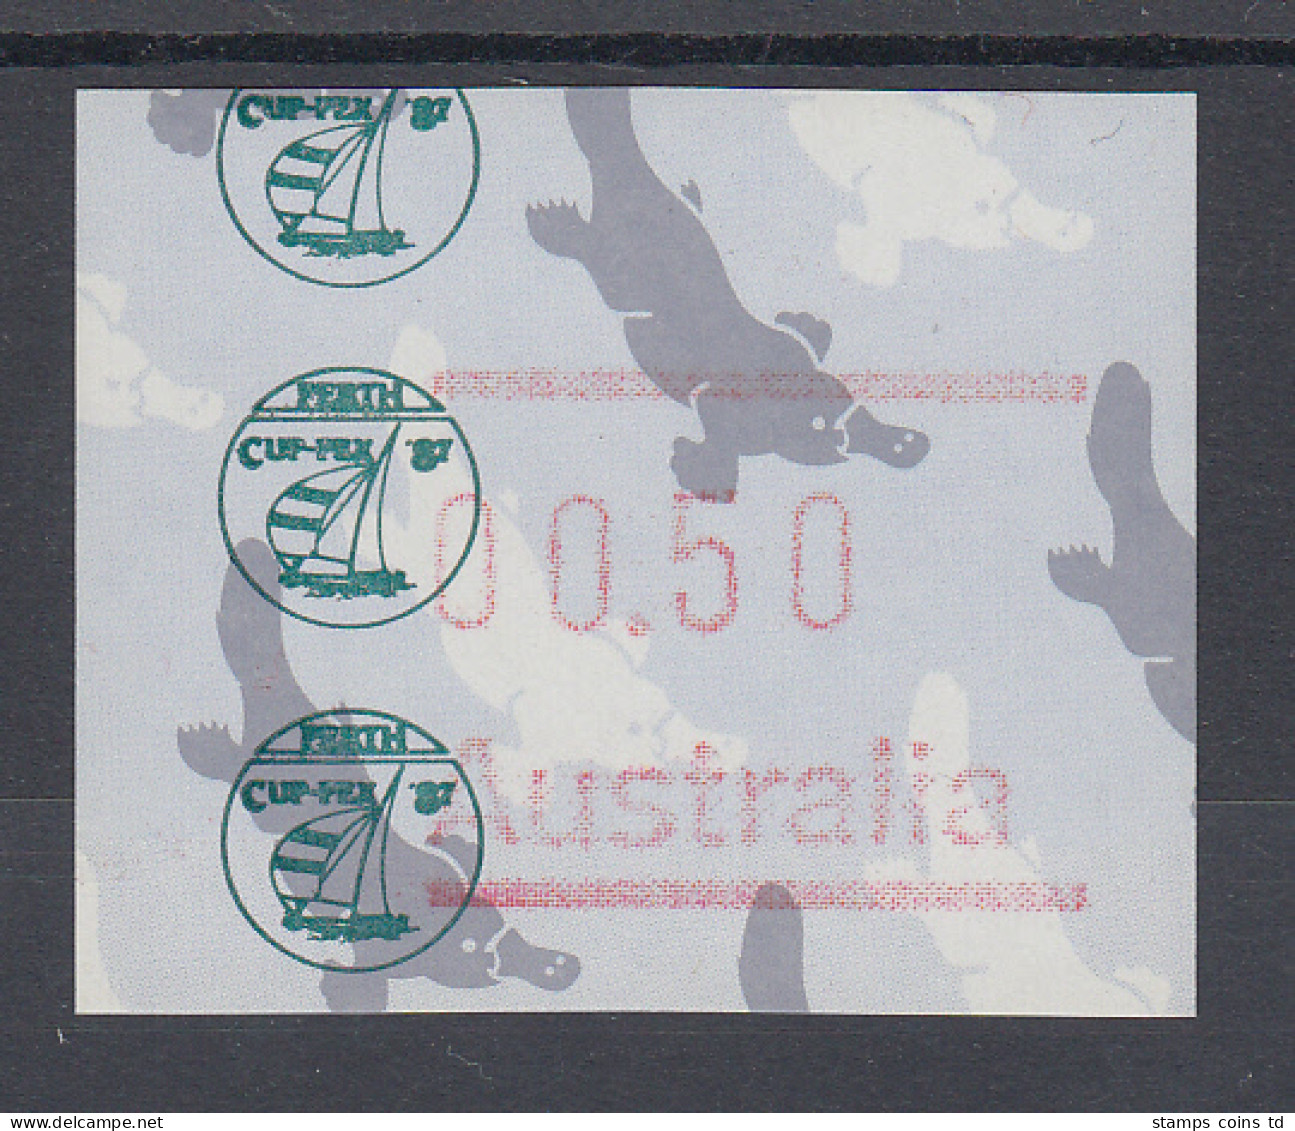 Australien Frama-ATM Sonderausgabe CUP-PEX `87 ** - Machine Labels [ATM]